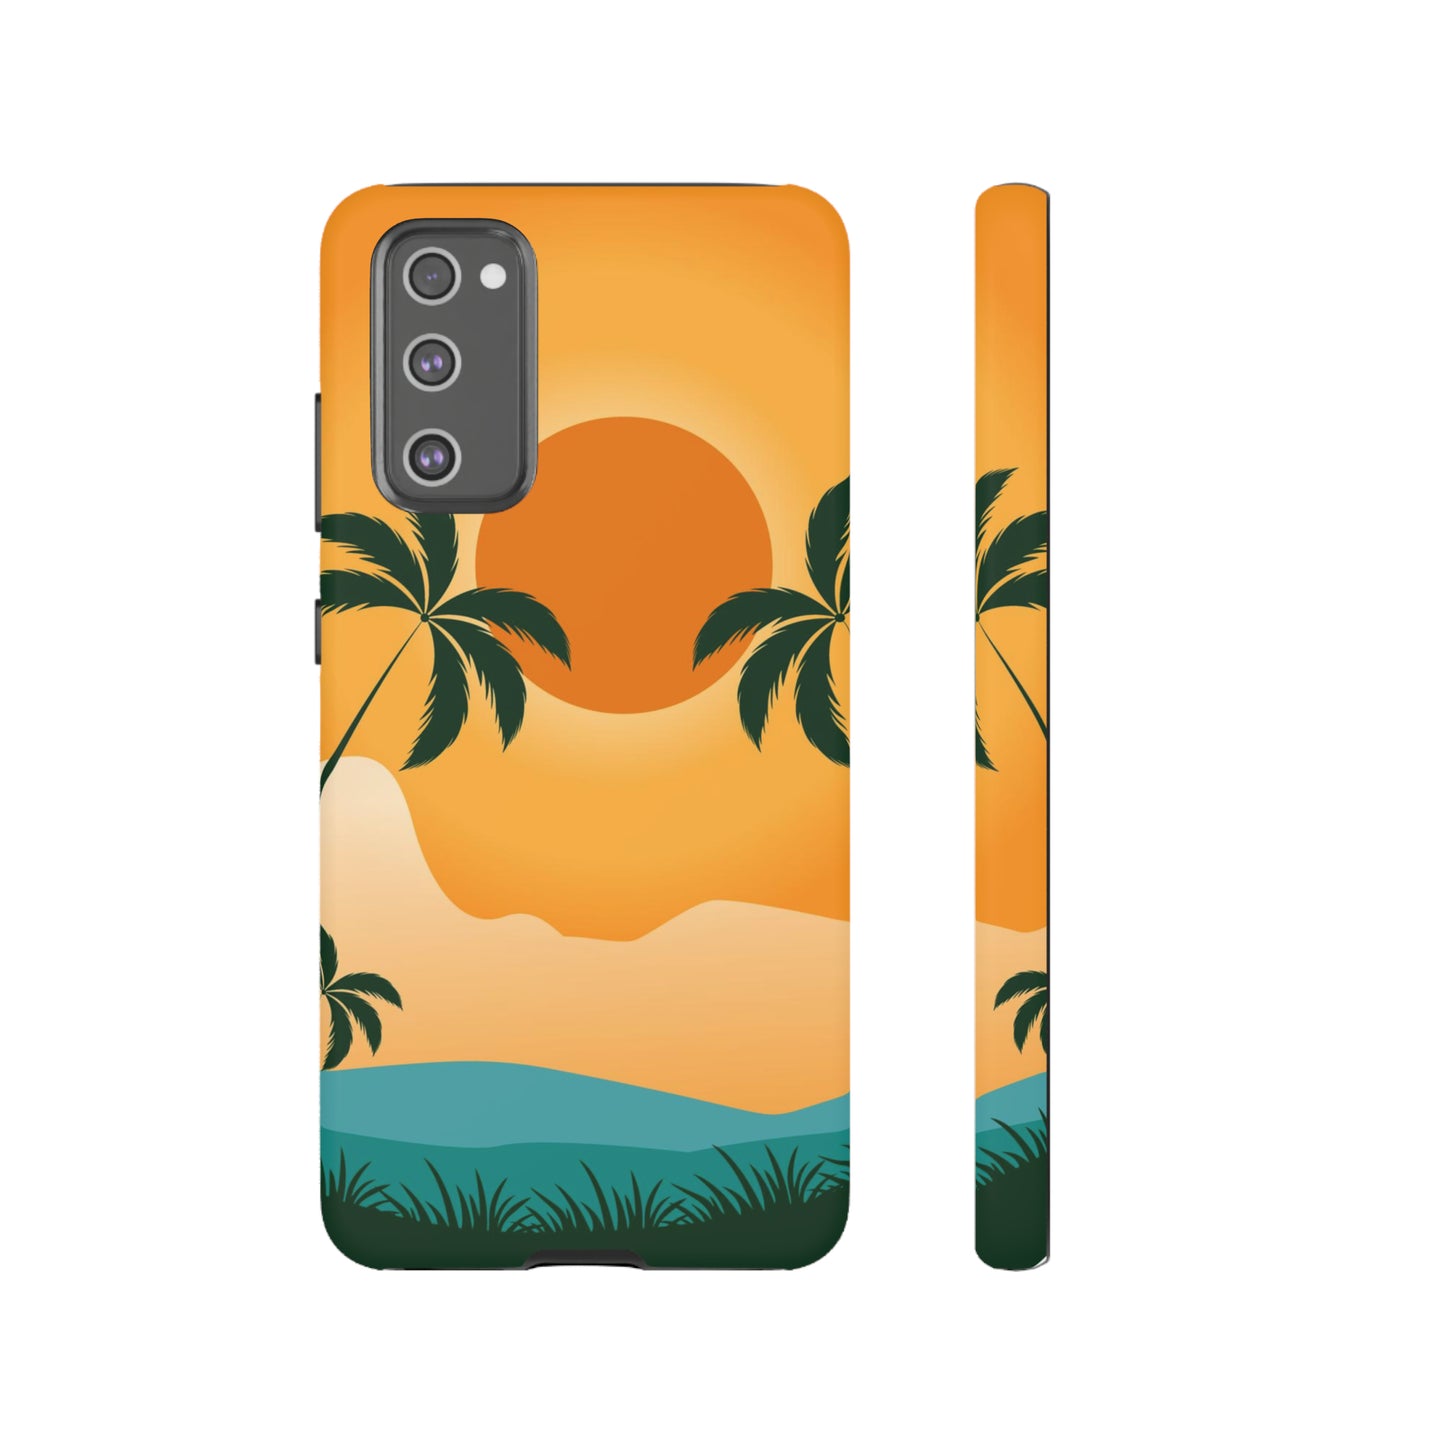 Sunset palm Samsung phone case